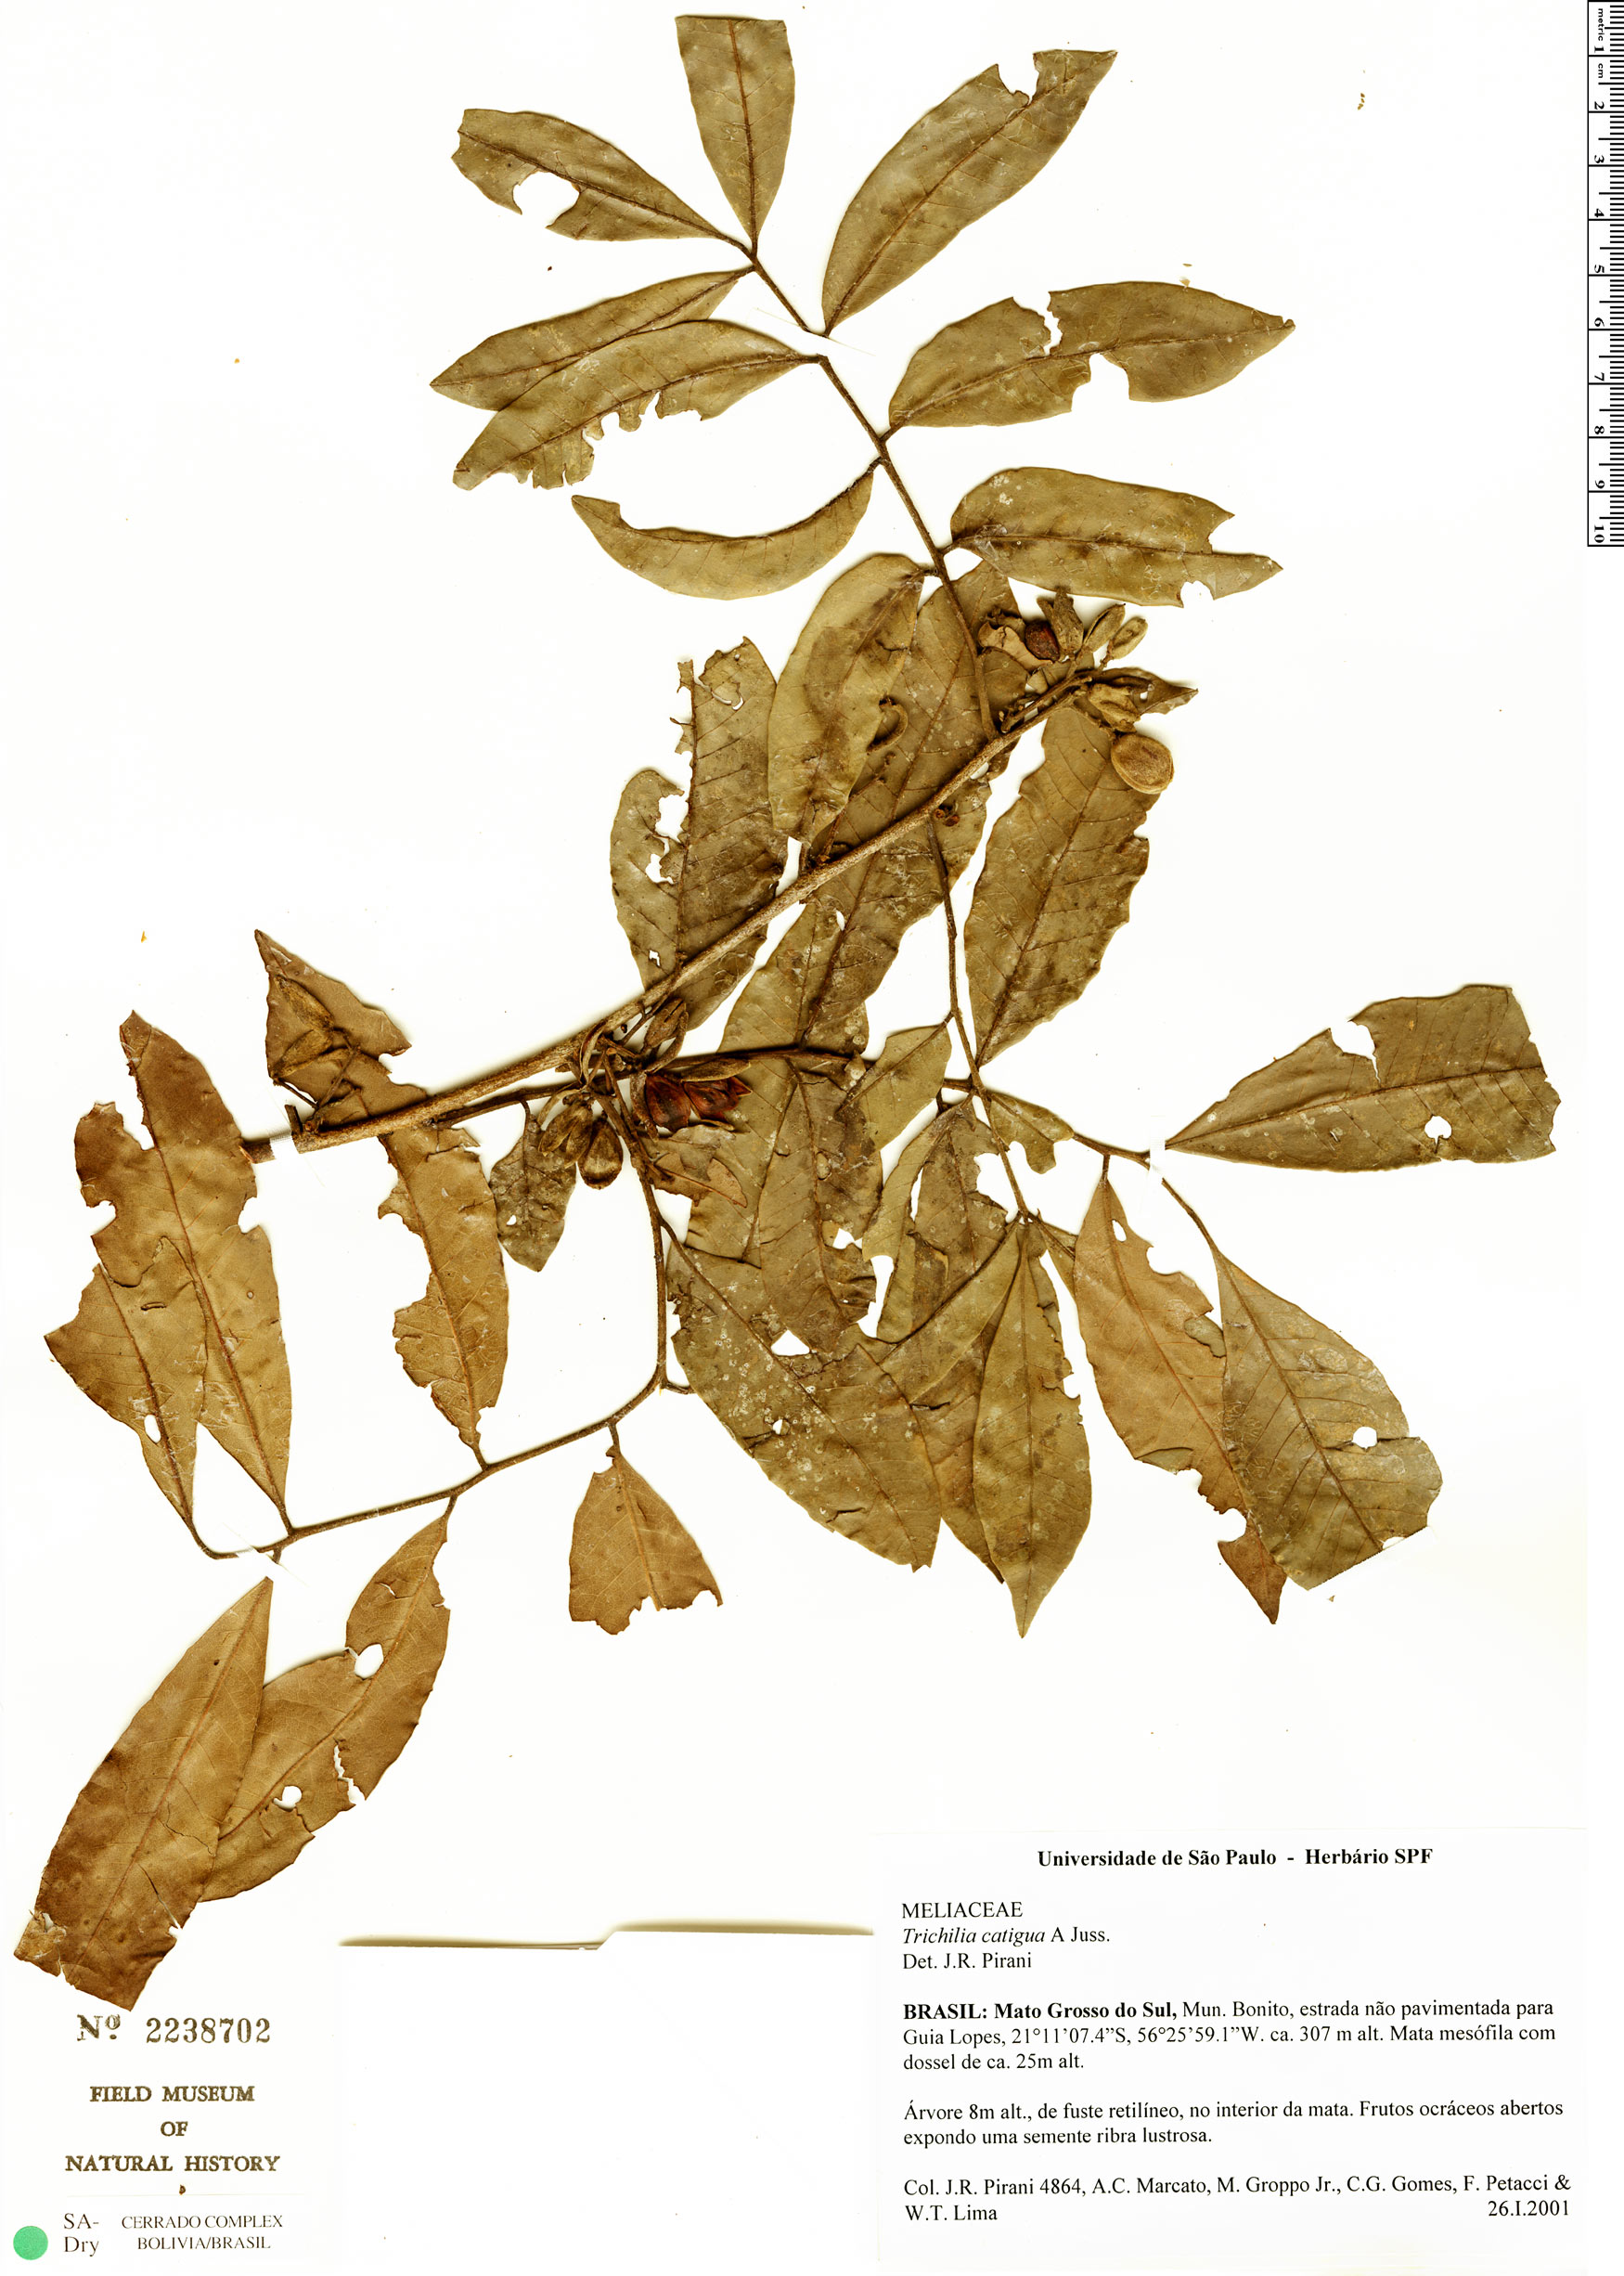 Trichilia catigua | Herbário Rapid Reference | The Field Museum